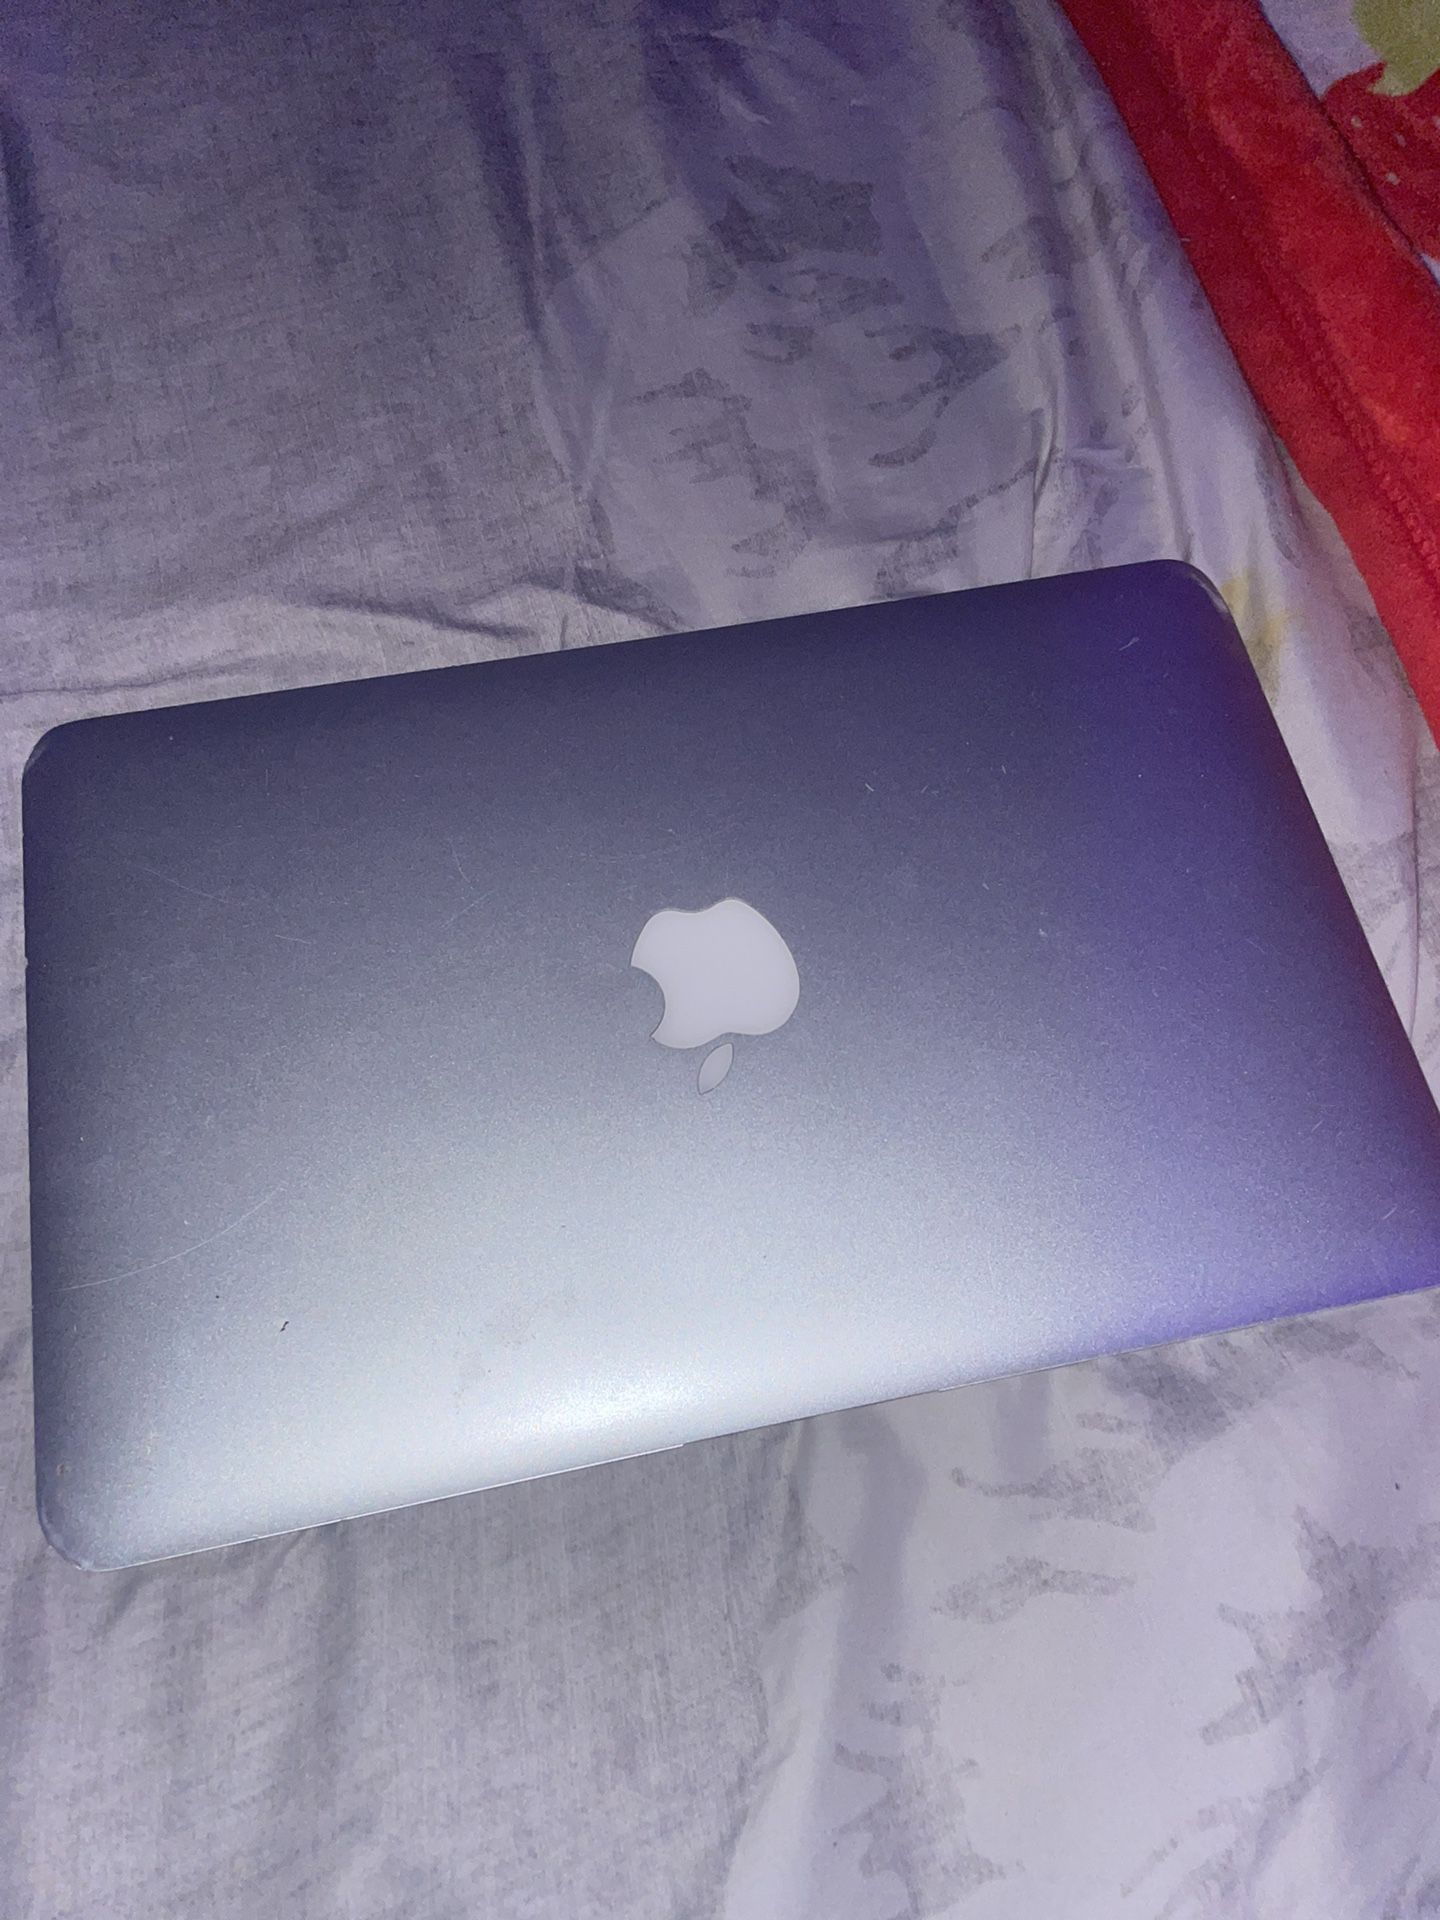 MacBook Air (11-inch) 